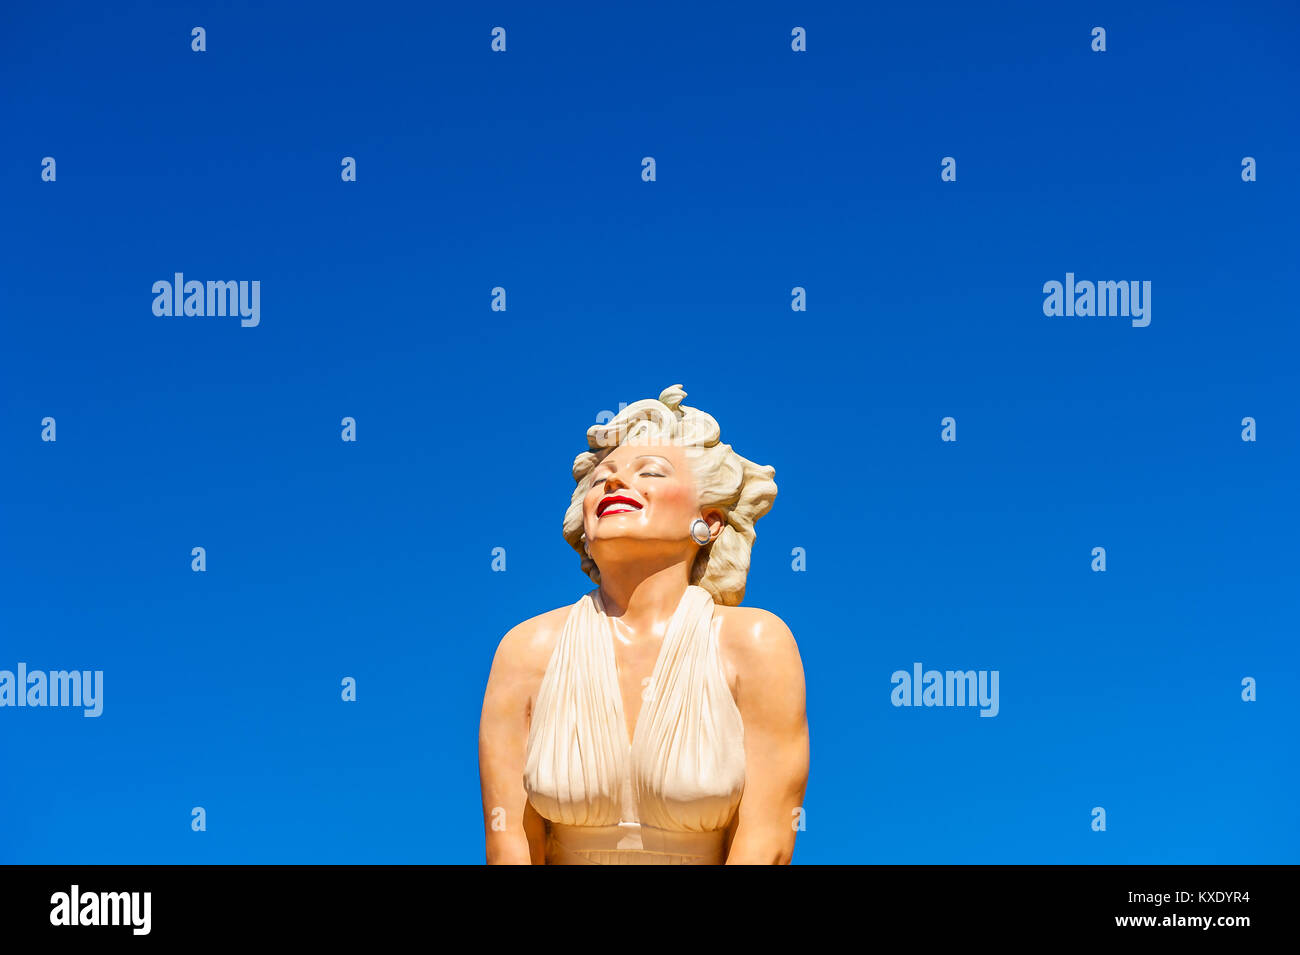 Detail der Marilyn Monroe Skulptur in Palm Springs, Kalifornien, USA. Marilyn Monroe wurde in Palm Springs entdeckt. Stockfoto